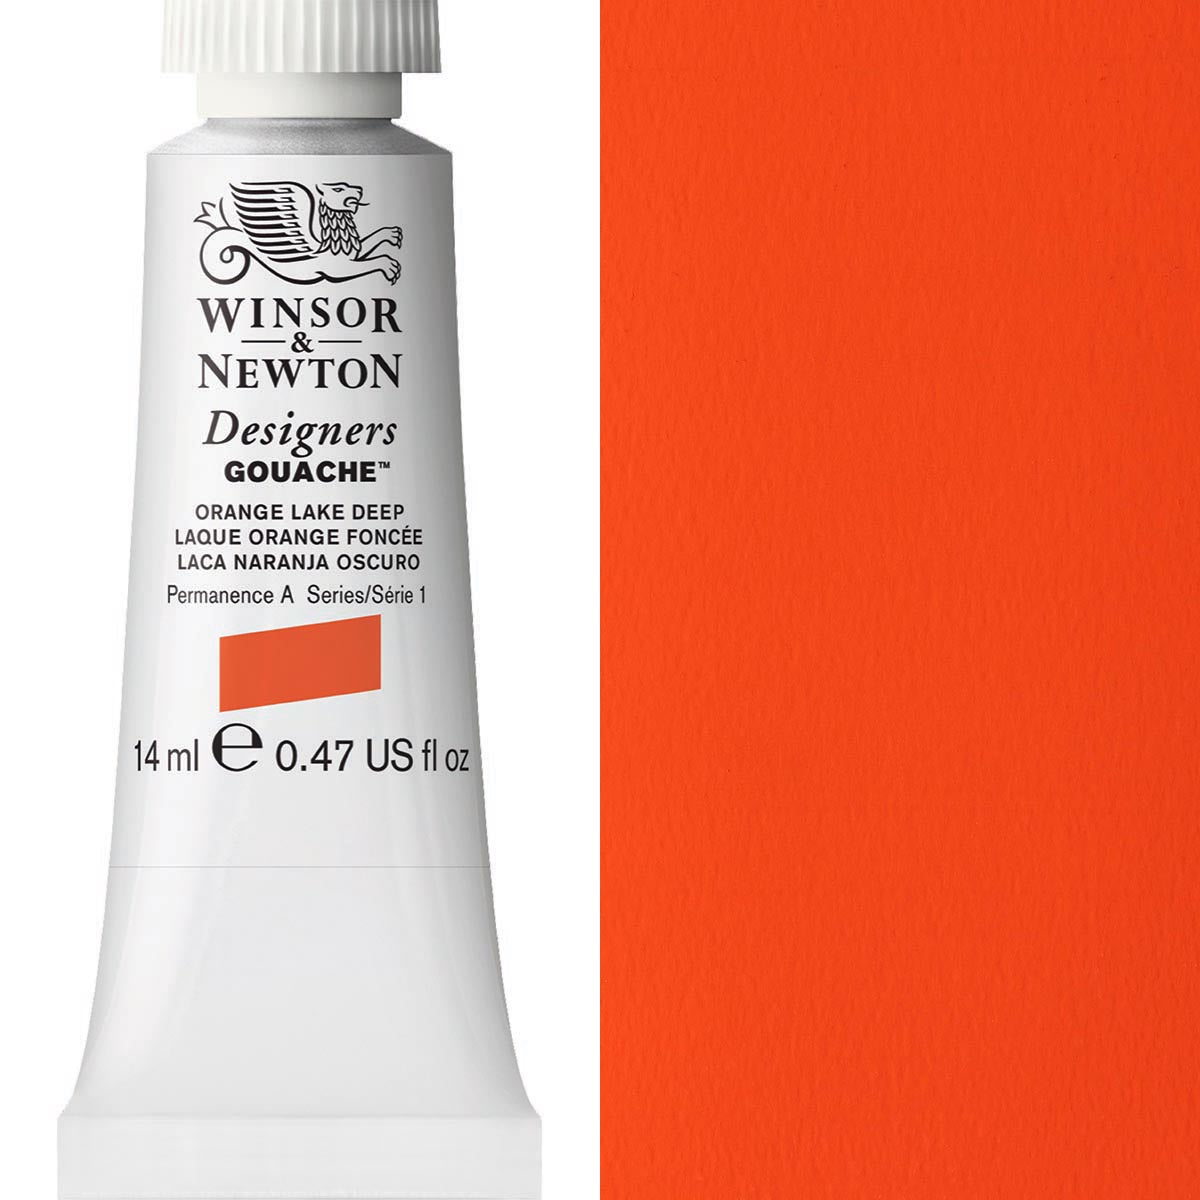 Winsor and Newton - Designers Gouache - 14ml - Orange Lake Deep